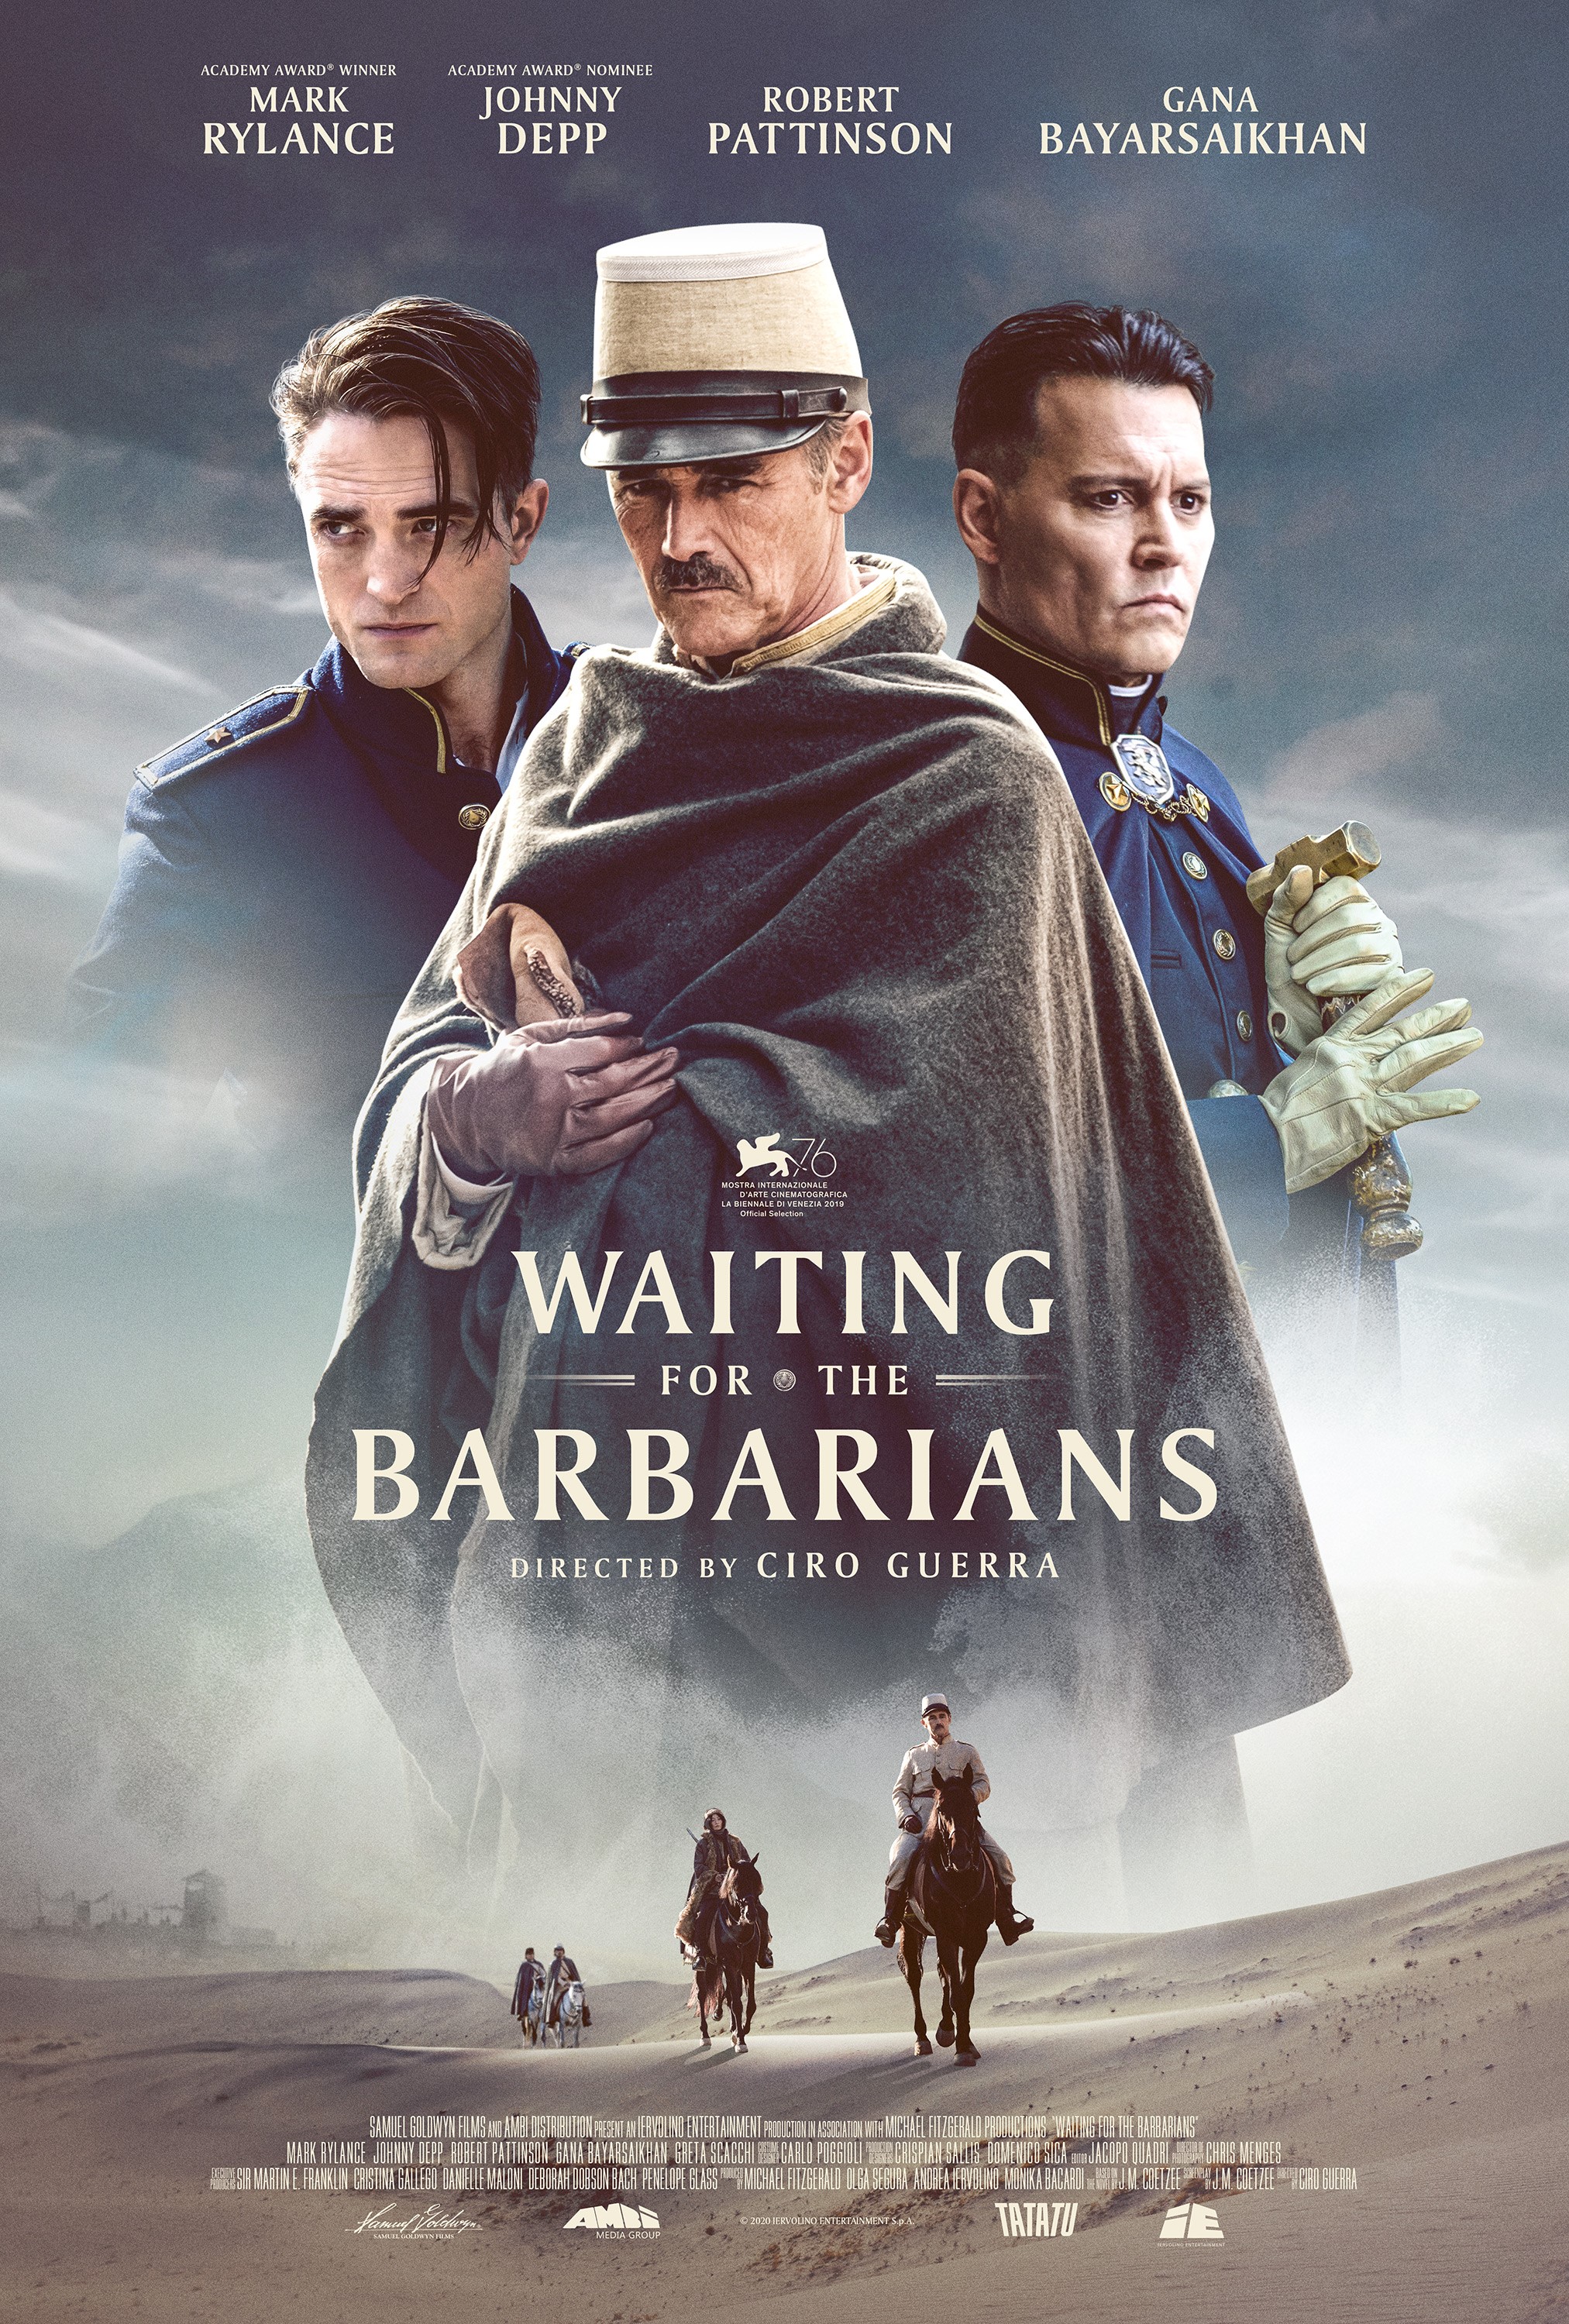 Stiahni si Filmy CZ/SK dabing Cekani na barbary / Waiting for the Barbarians (2019)(CZ)[1080p] = CSFD 59%